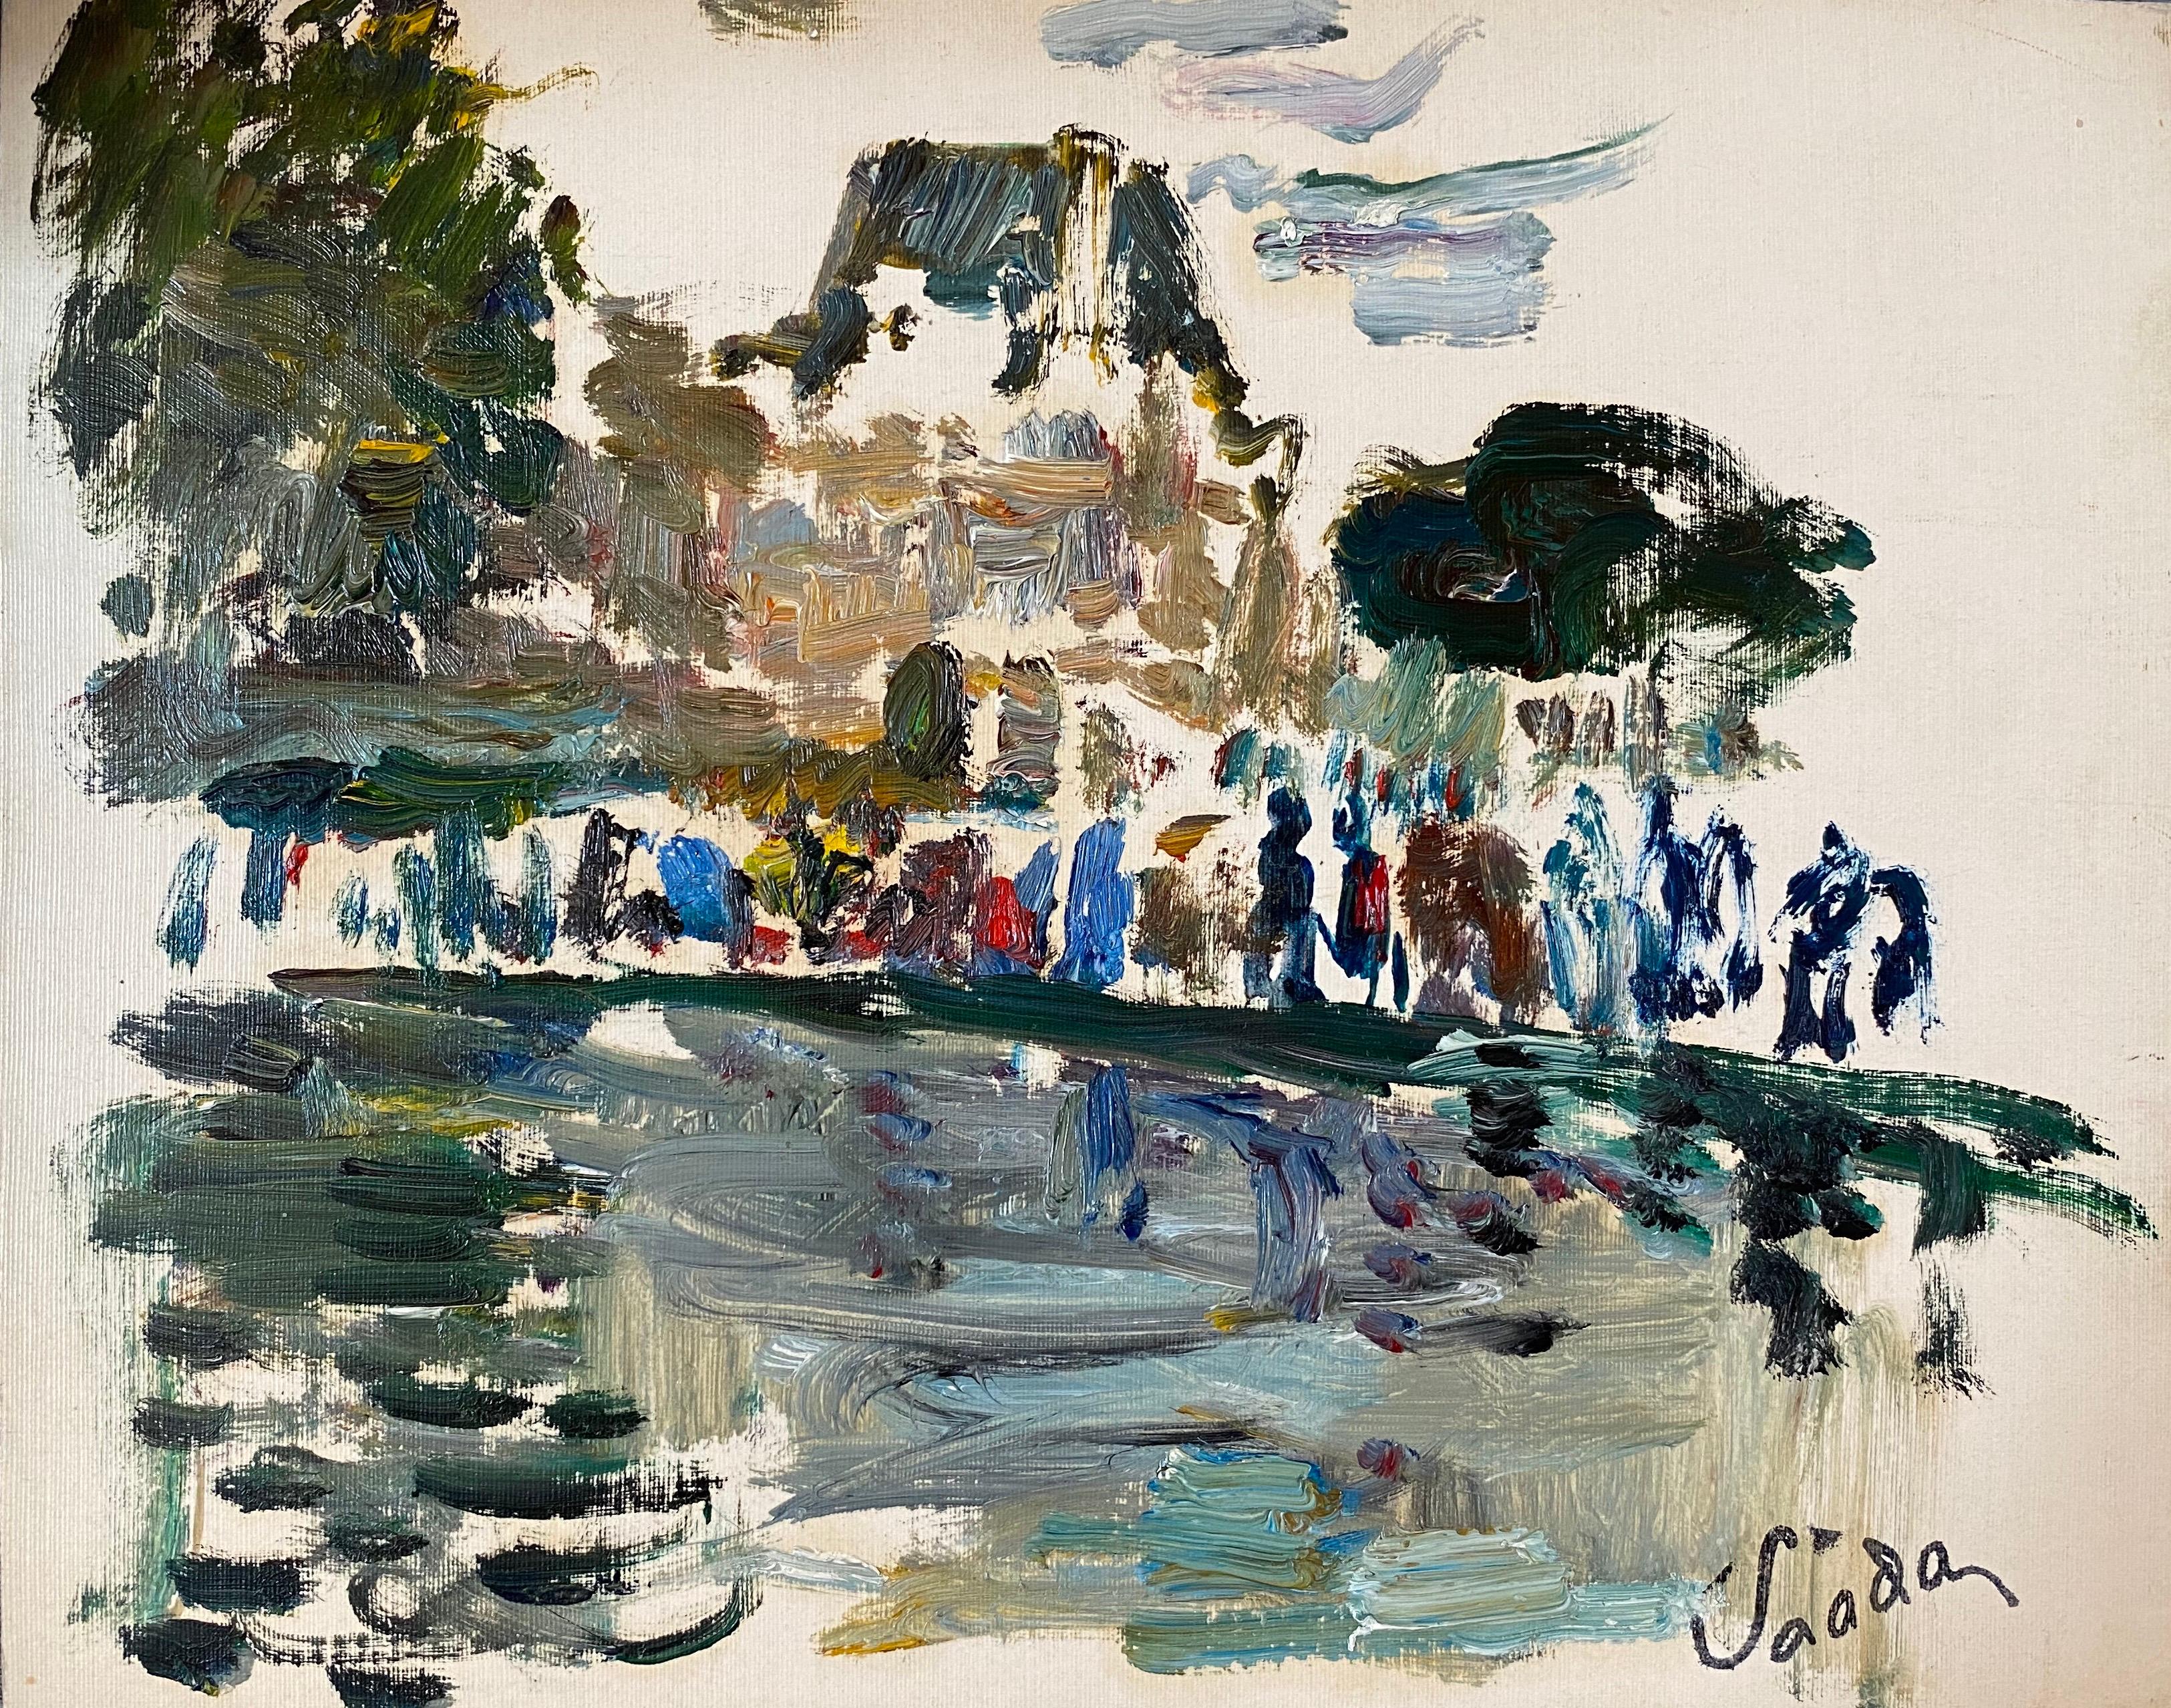 Sadda Landscape Painting - Parisian Park Louvre Paris, Figures by Pond, Signed French Impressionist Oil